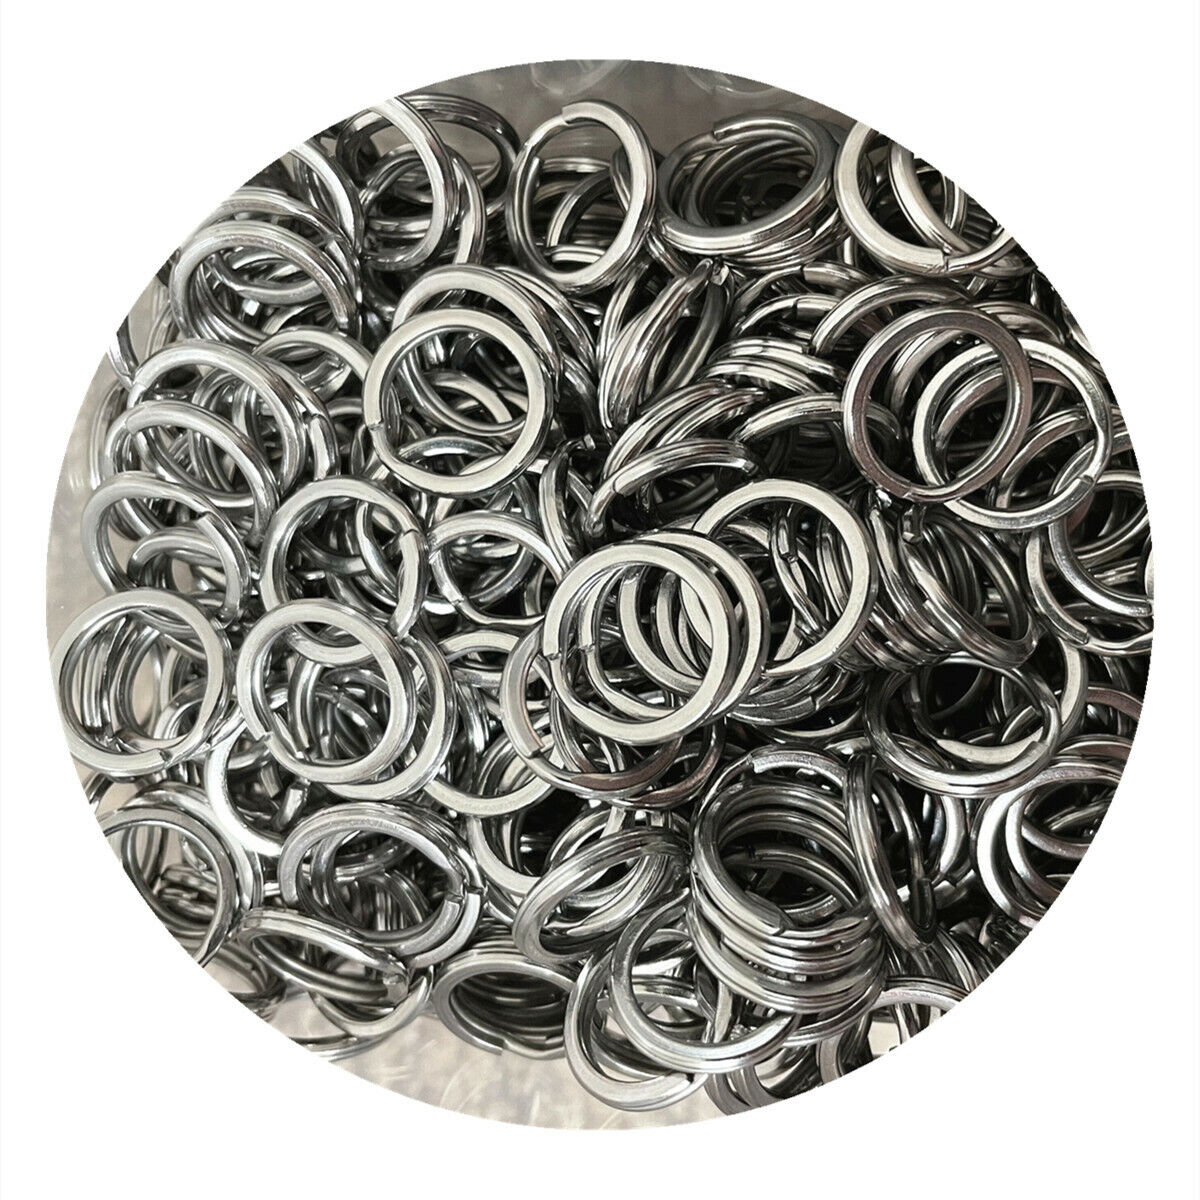 10-1000pcs Stainless Steel Small Key Rings Split Ring 15mm Flat Metal Keychain